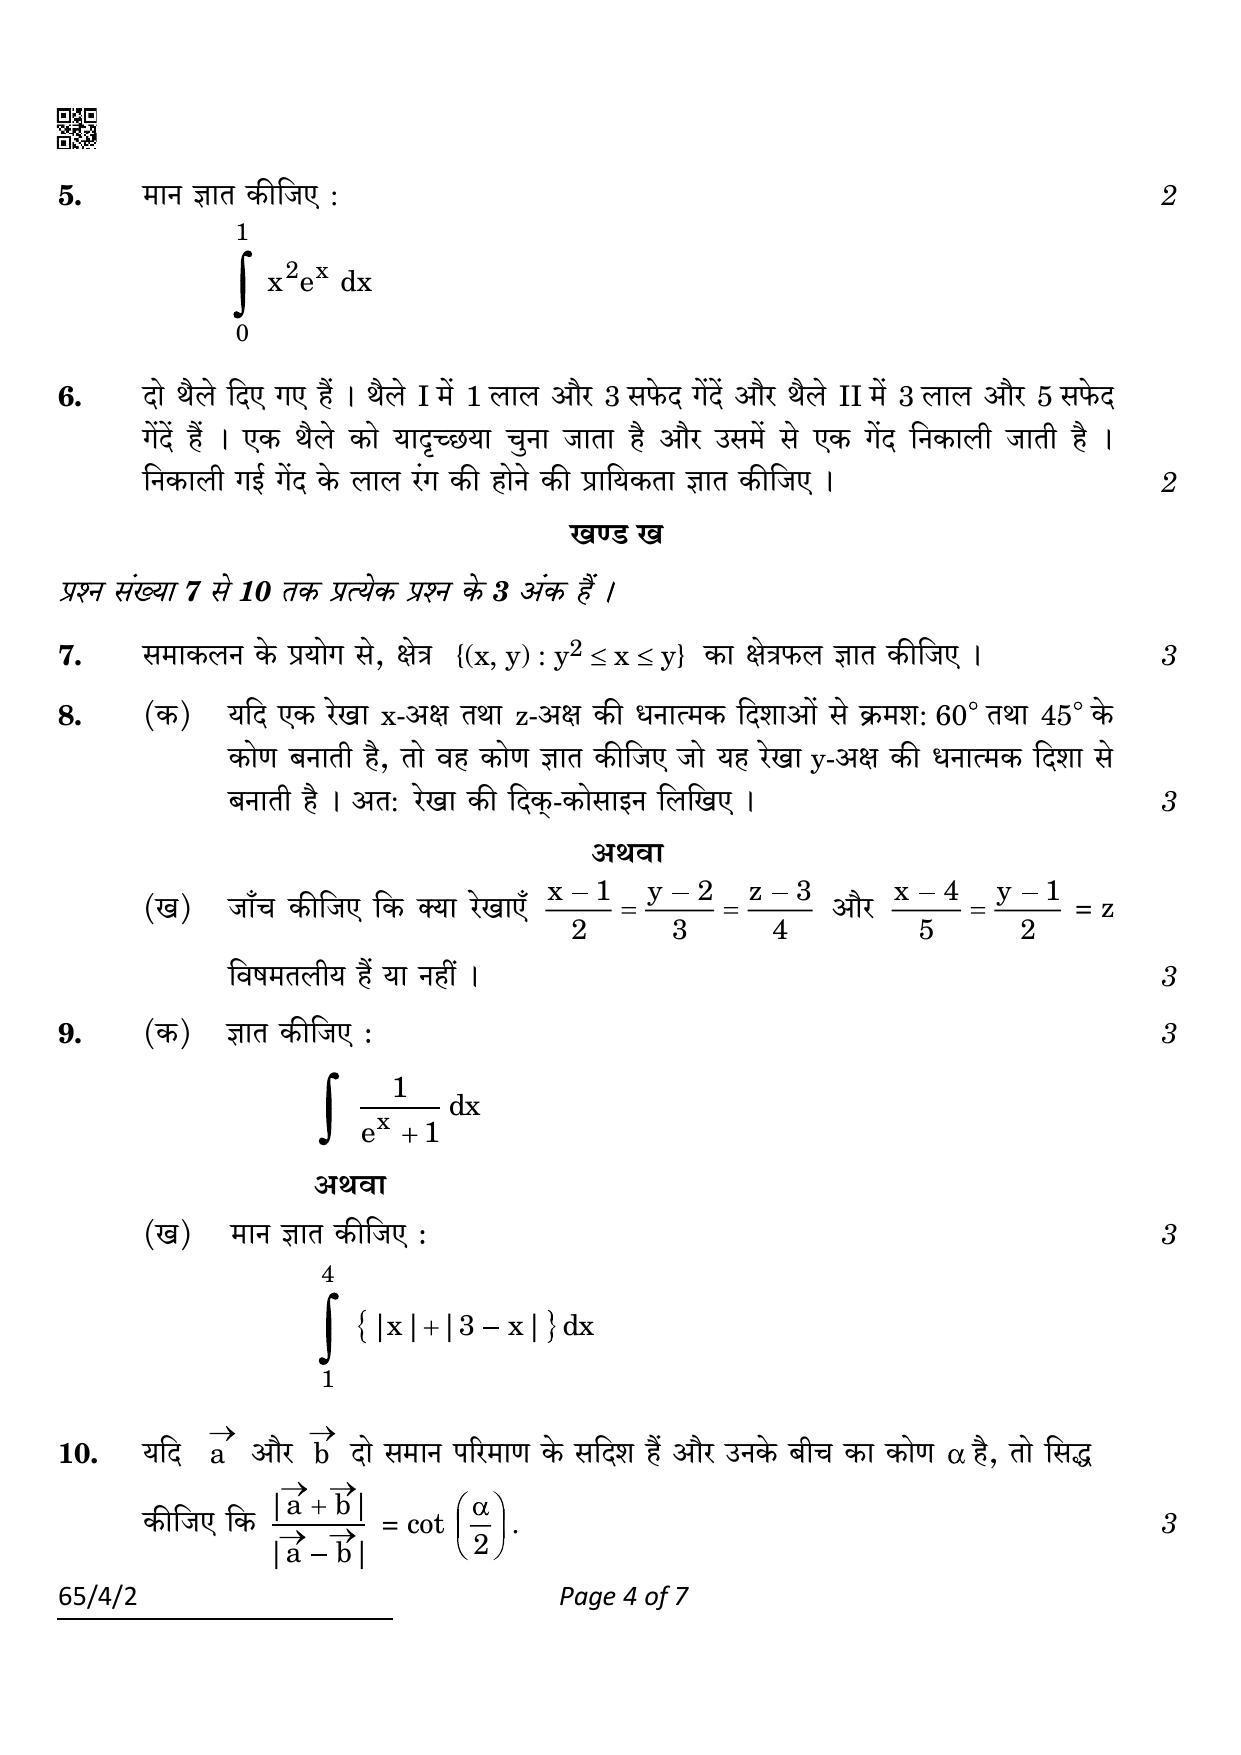 CBSE Class 12 65-4-2 Mathematics 2022 Question Paper - Page 4